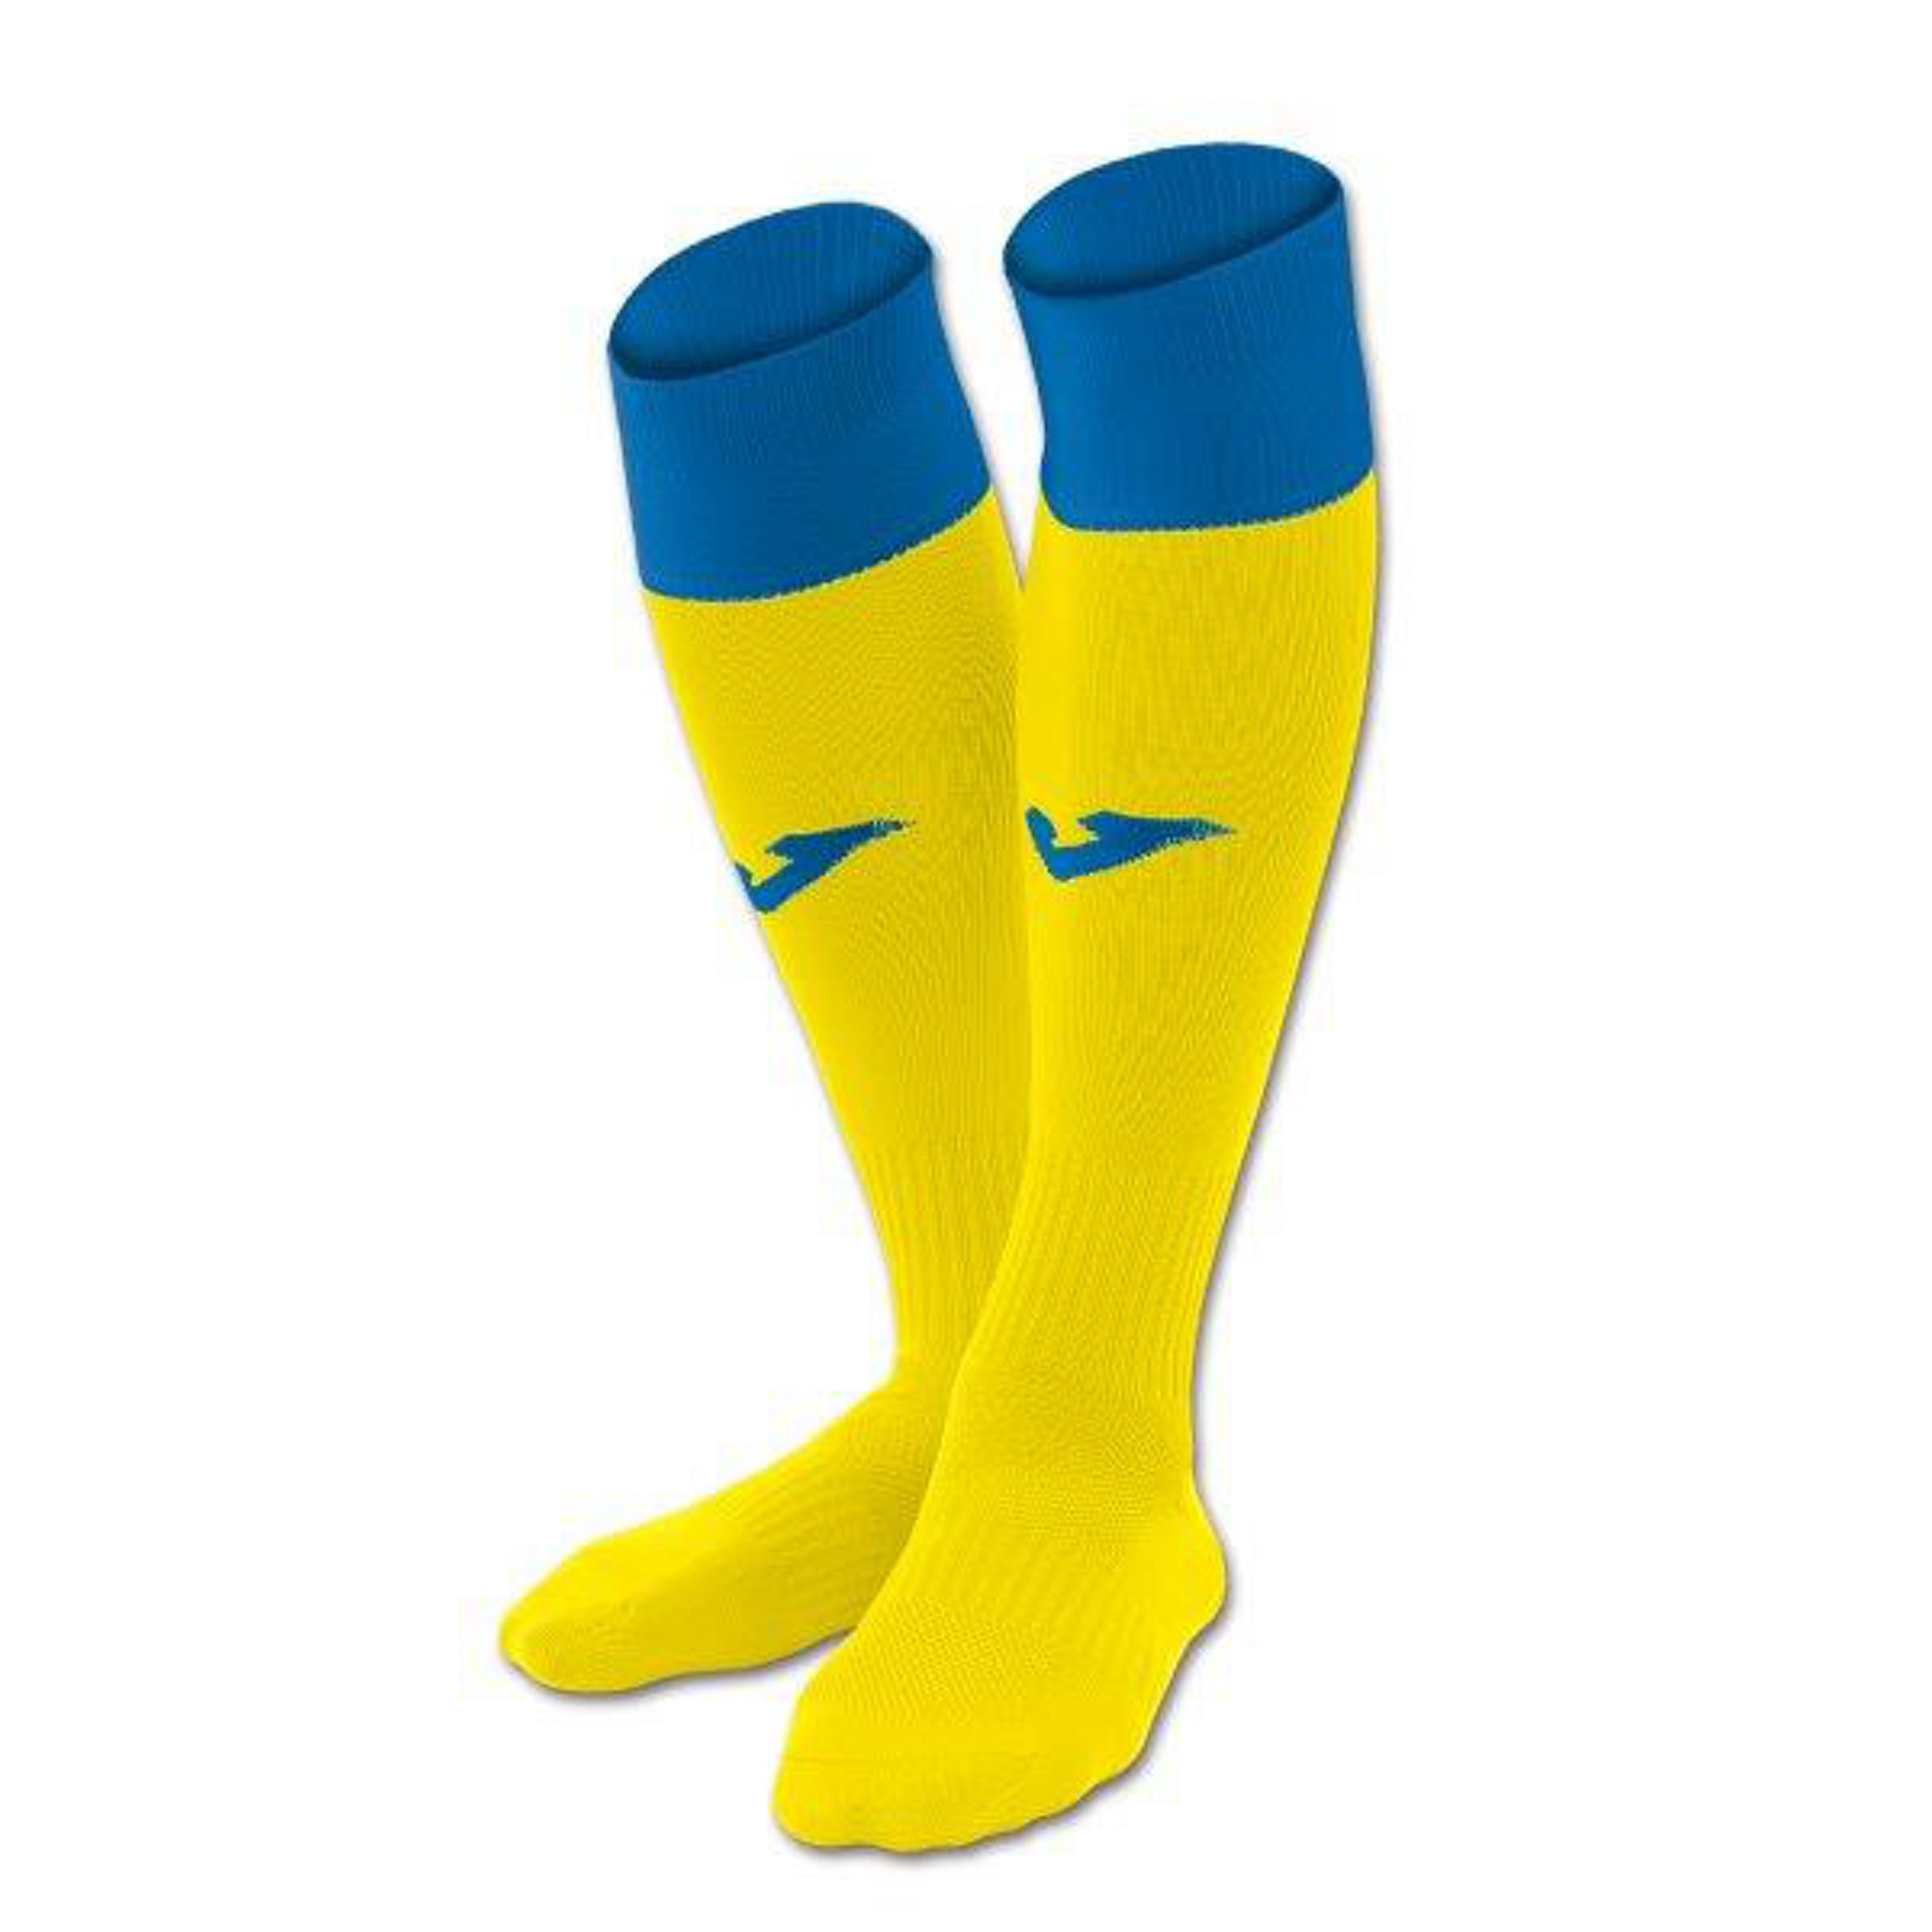 Joma Calcio Sock S (12-1.5) Yel-roy